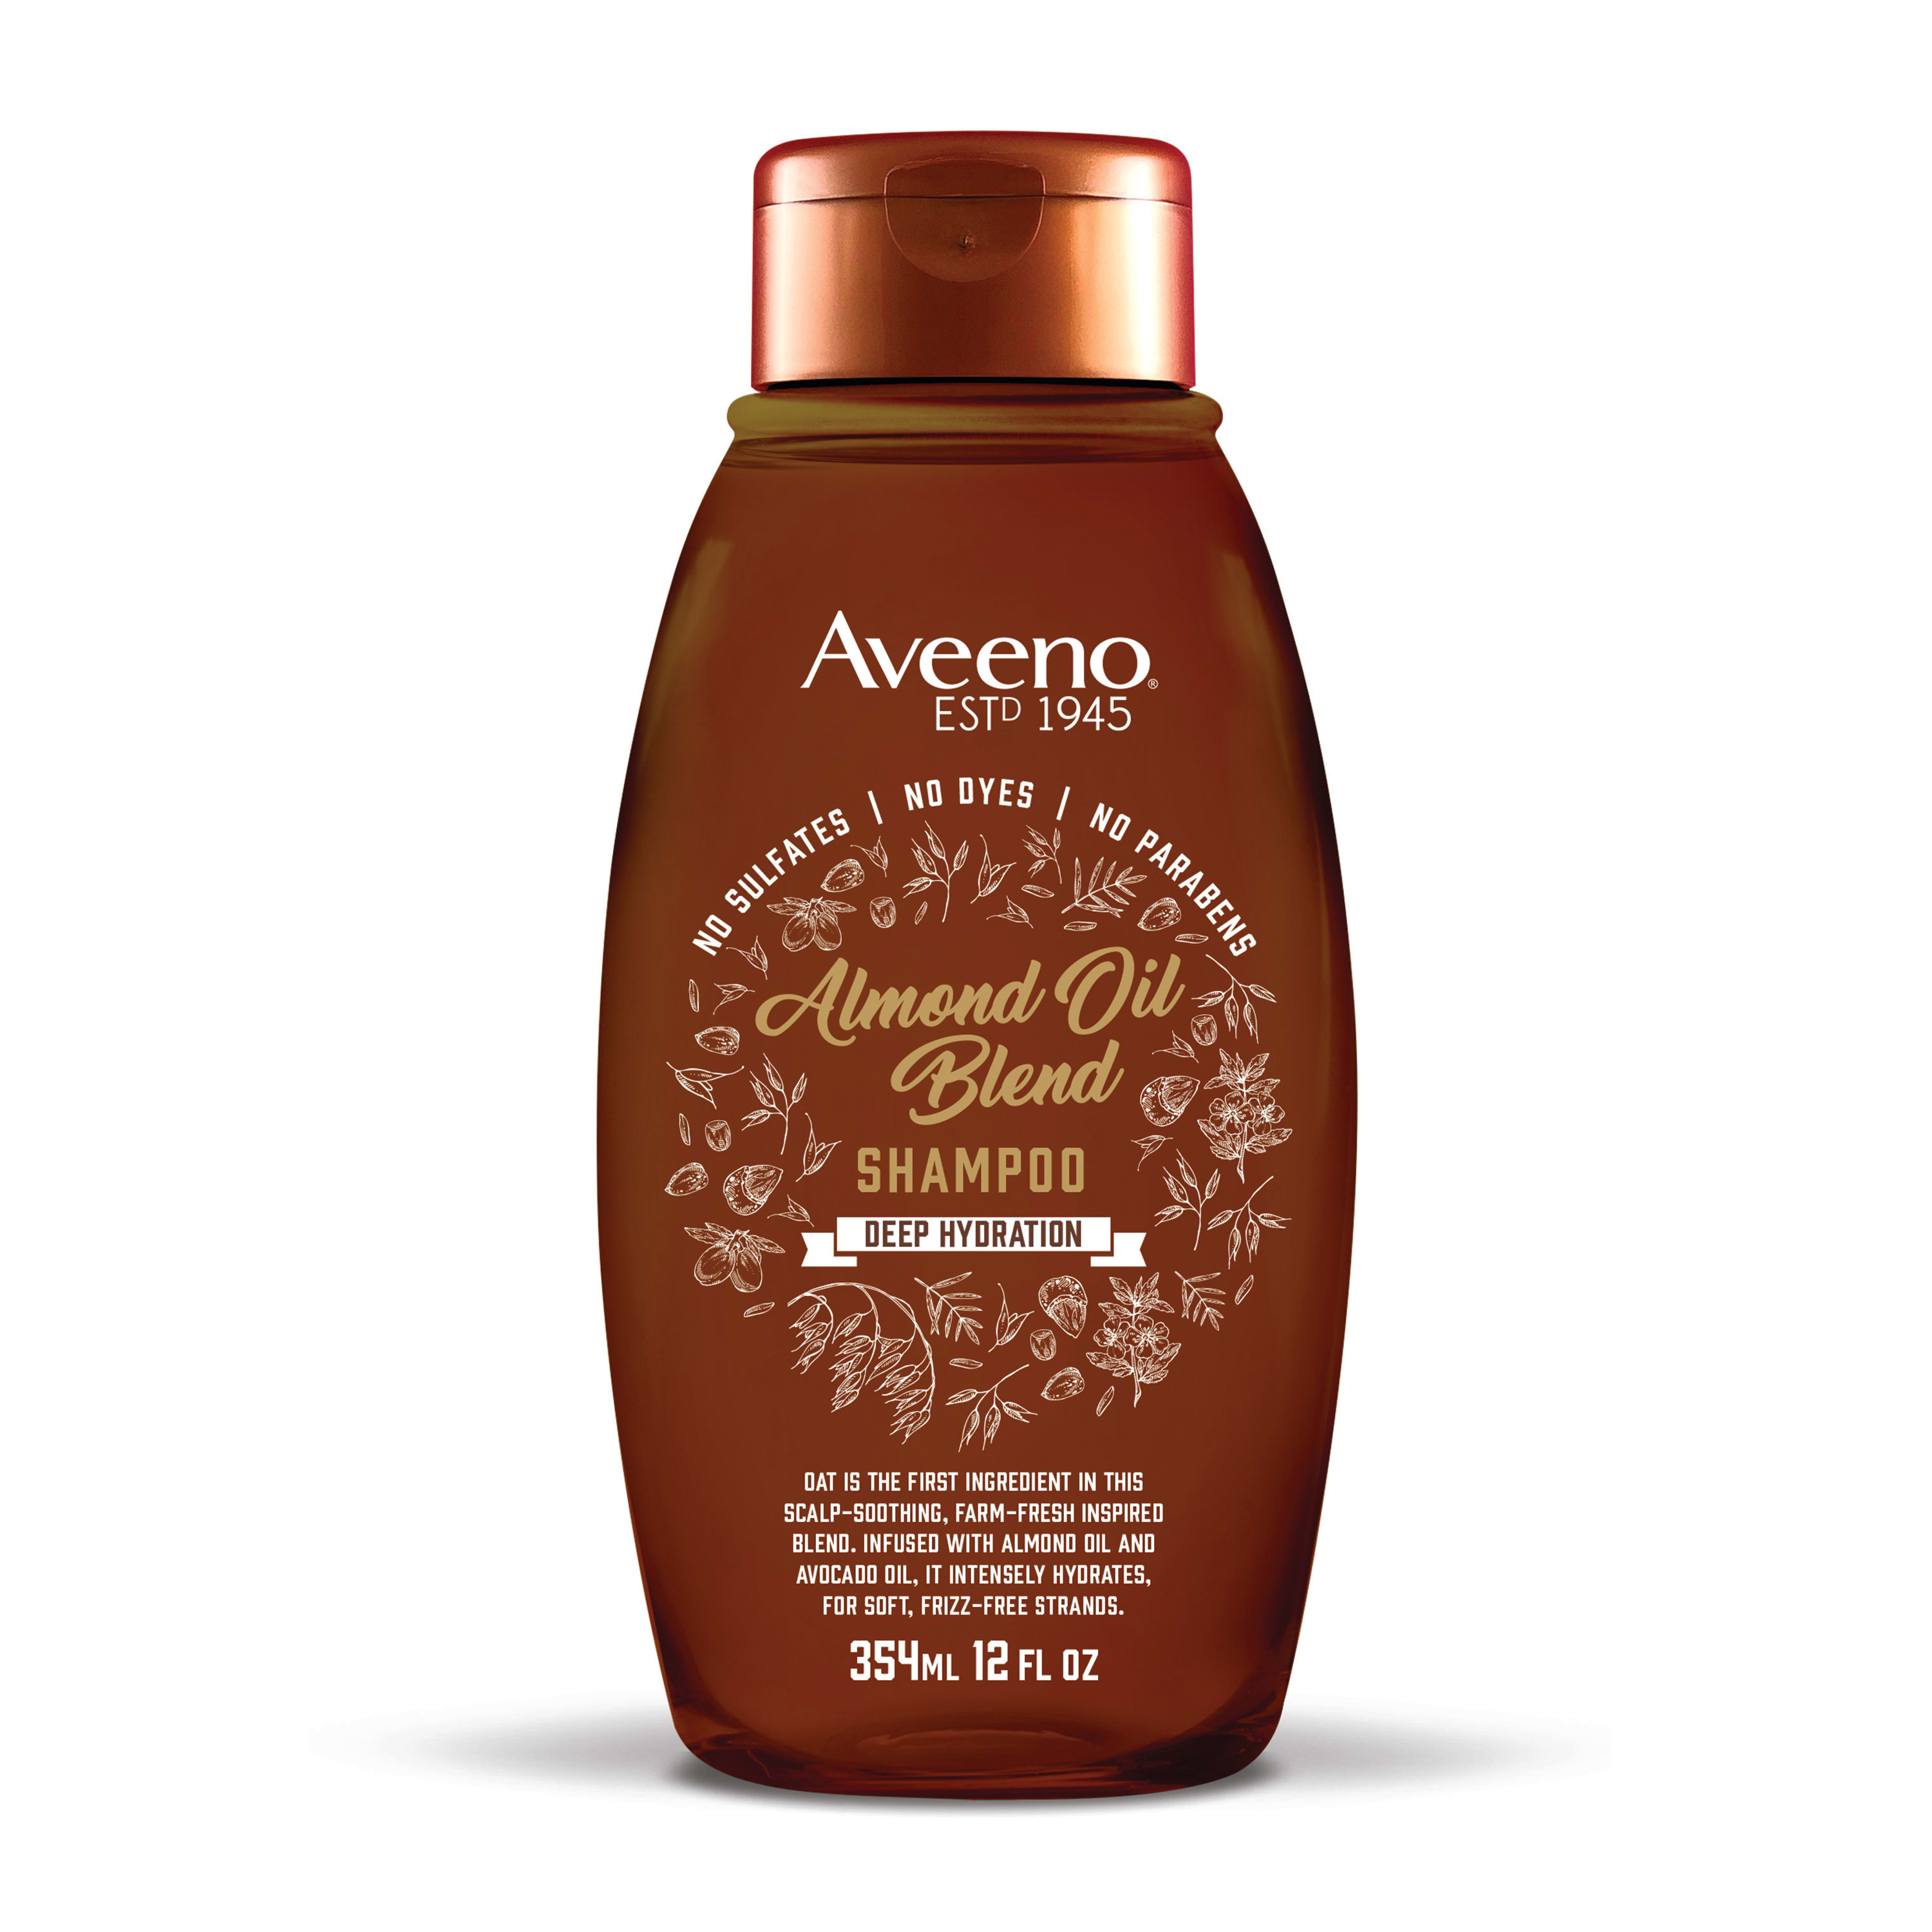 Aveeno Shampoo Almond Oil Blend 12 Ounce (354ml) - image 4 of 8